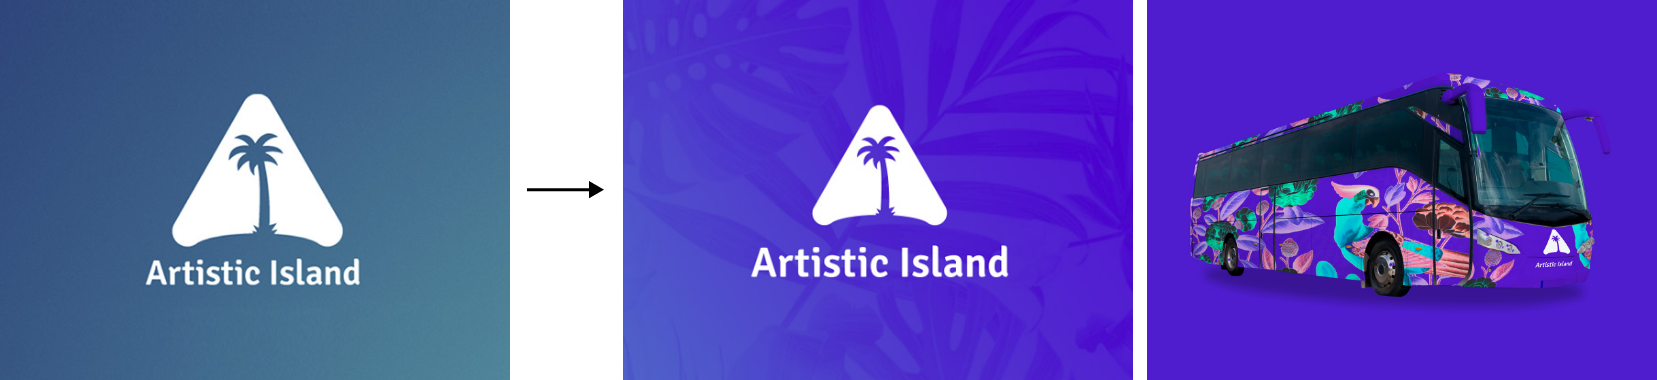 antes después branding - artistic island